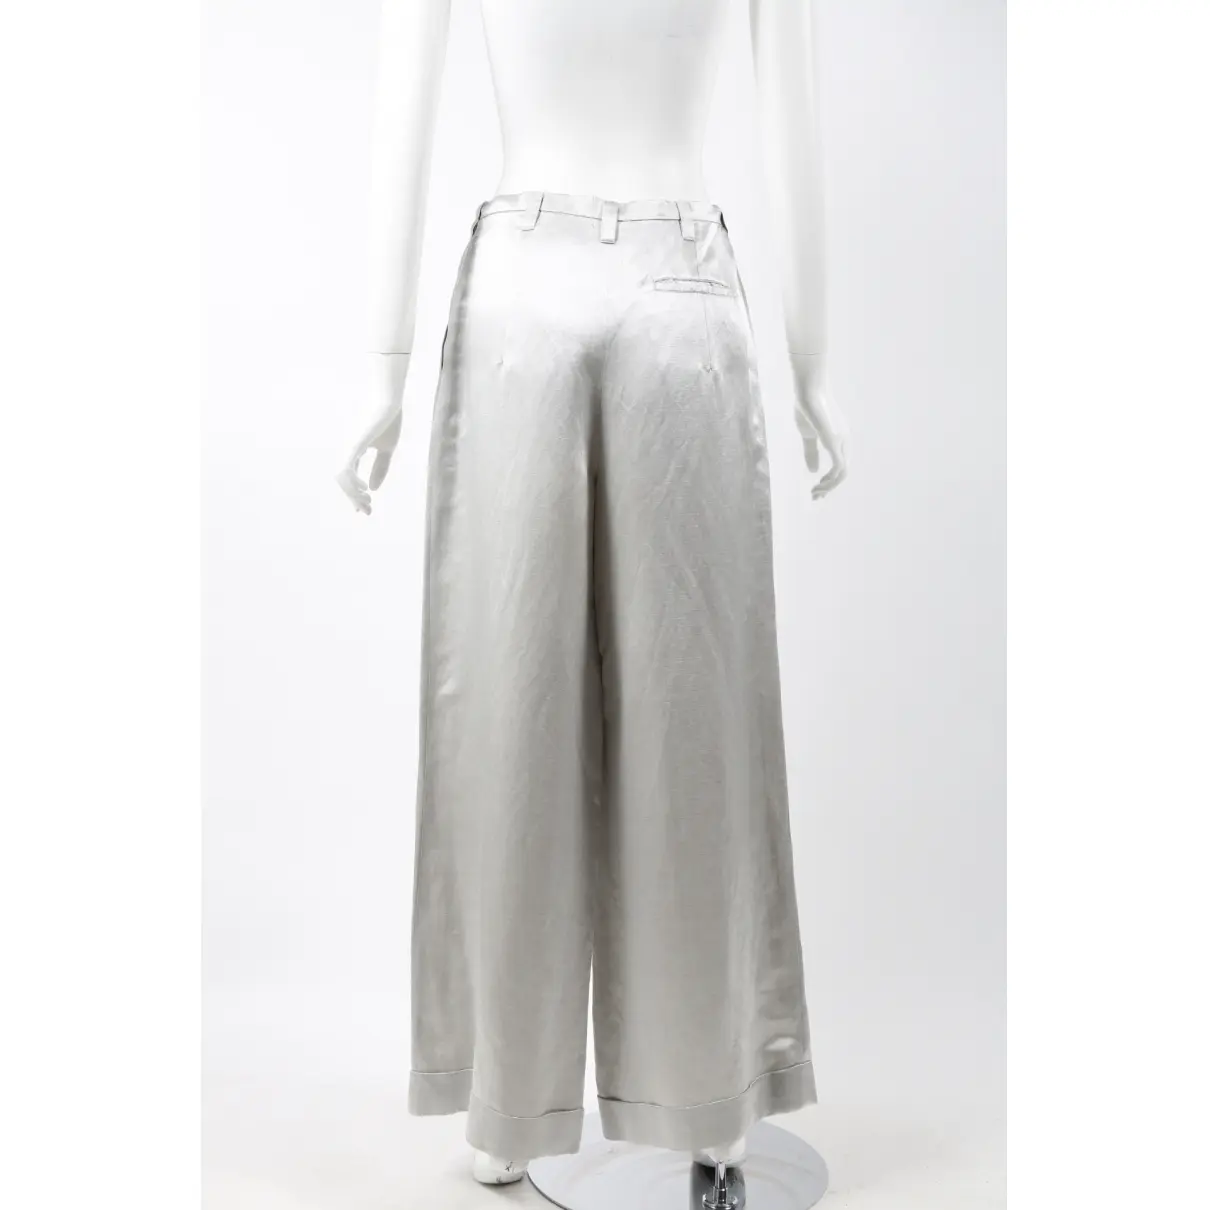 Jil Sander Linen trousers for sale - Vintage